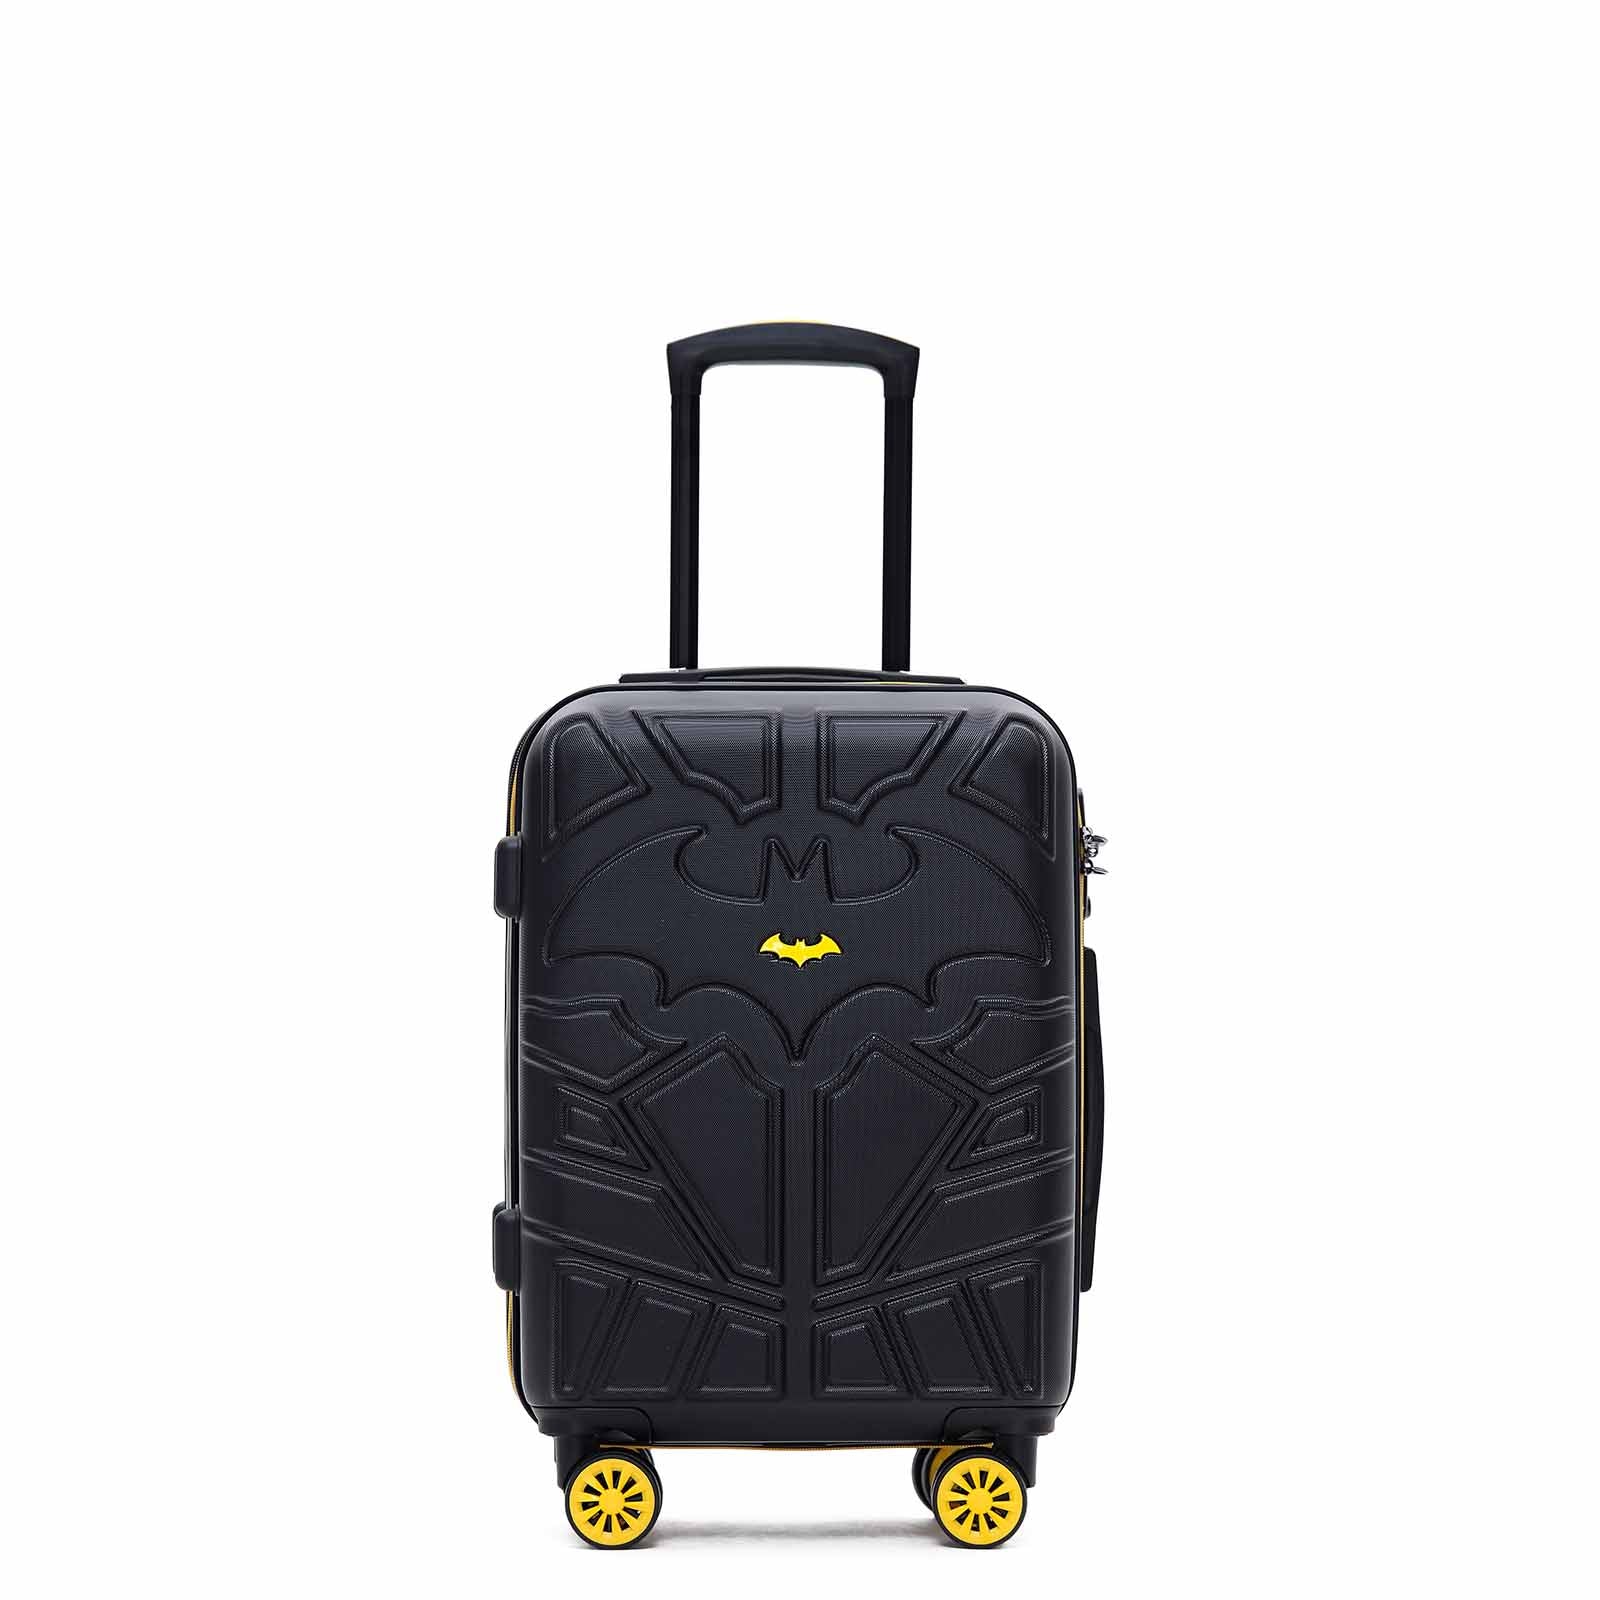 Warner Brothers Batman 24inch Medium Suitcase